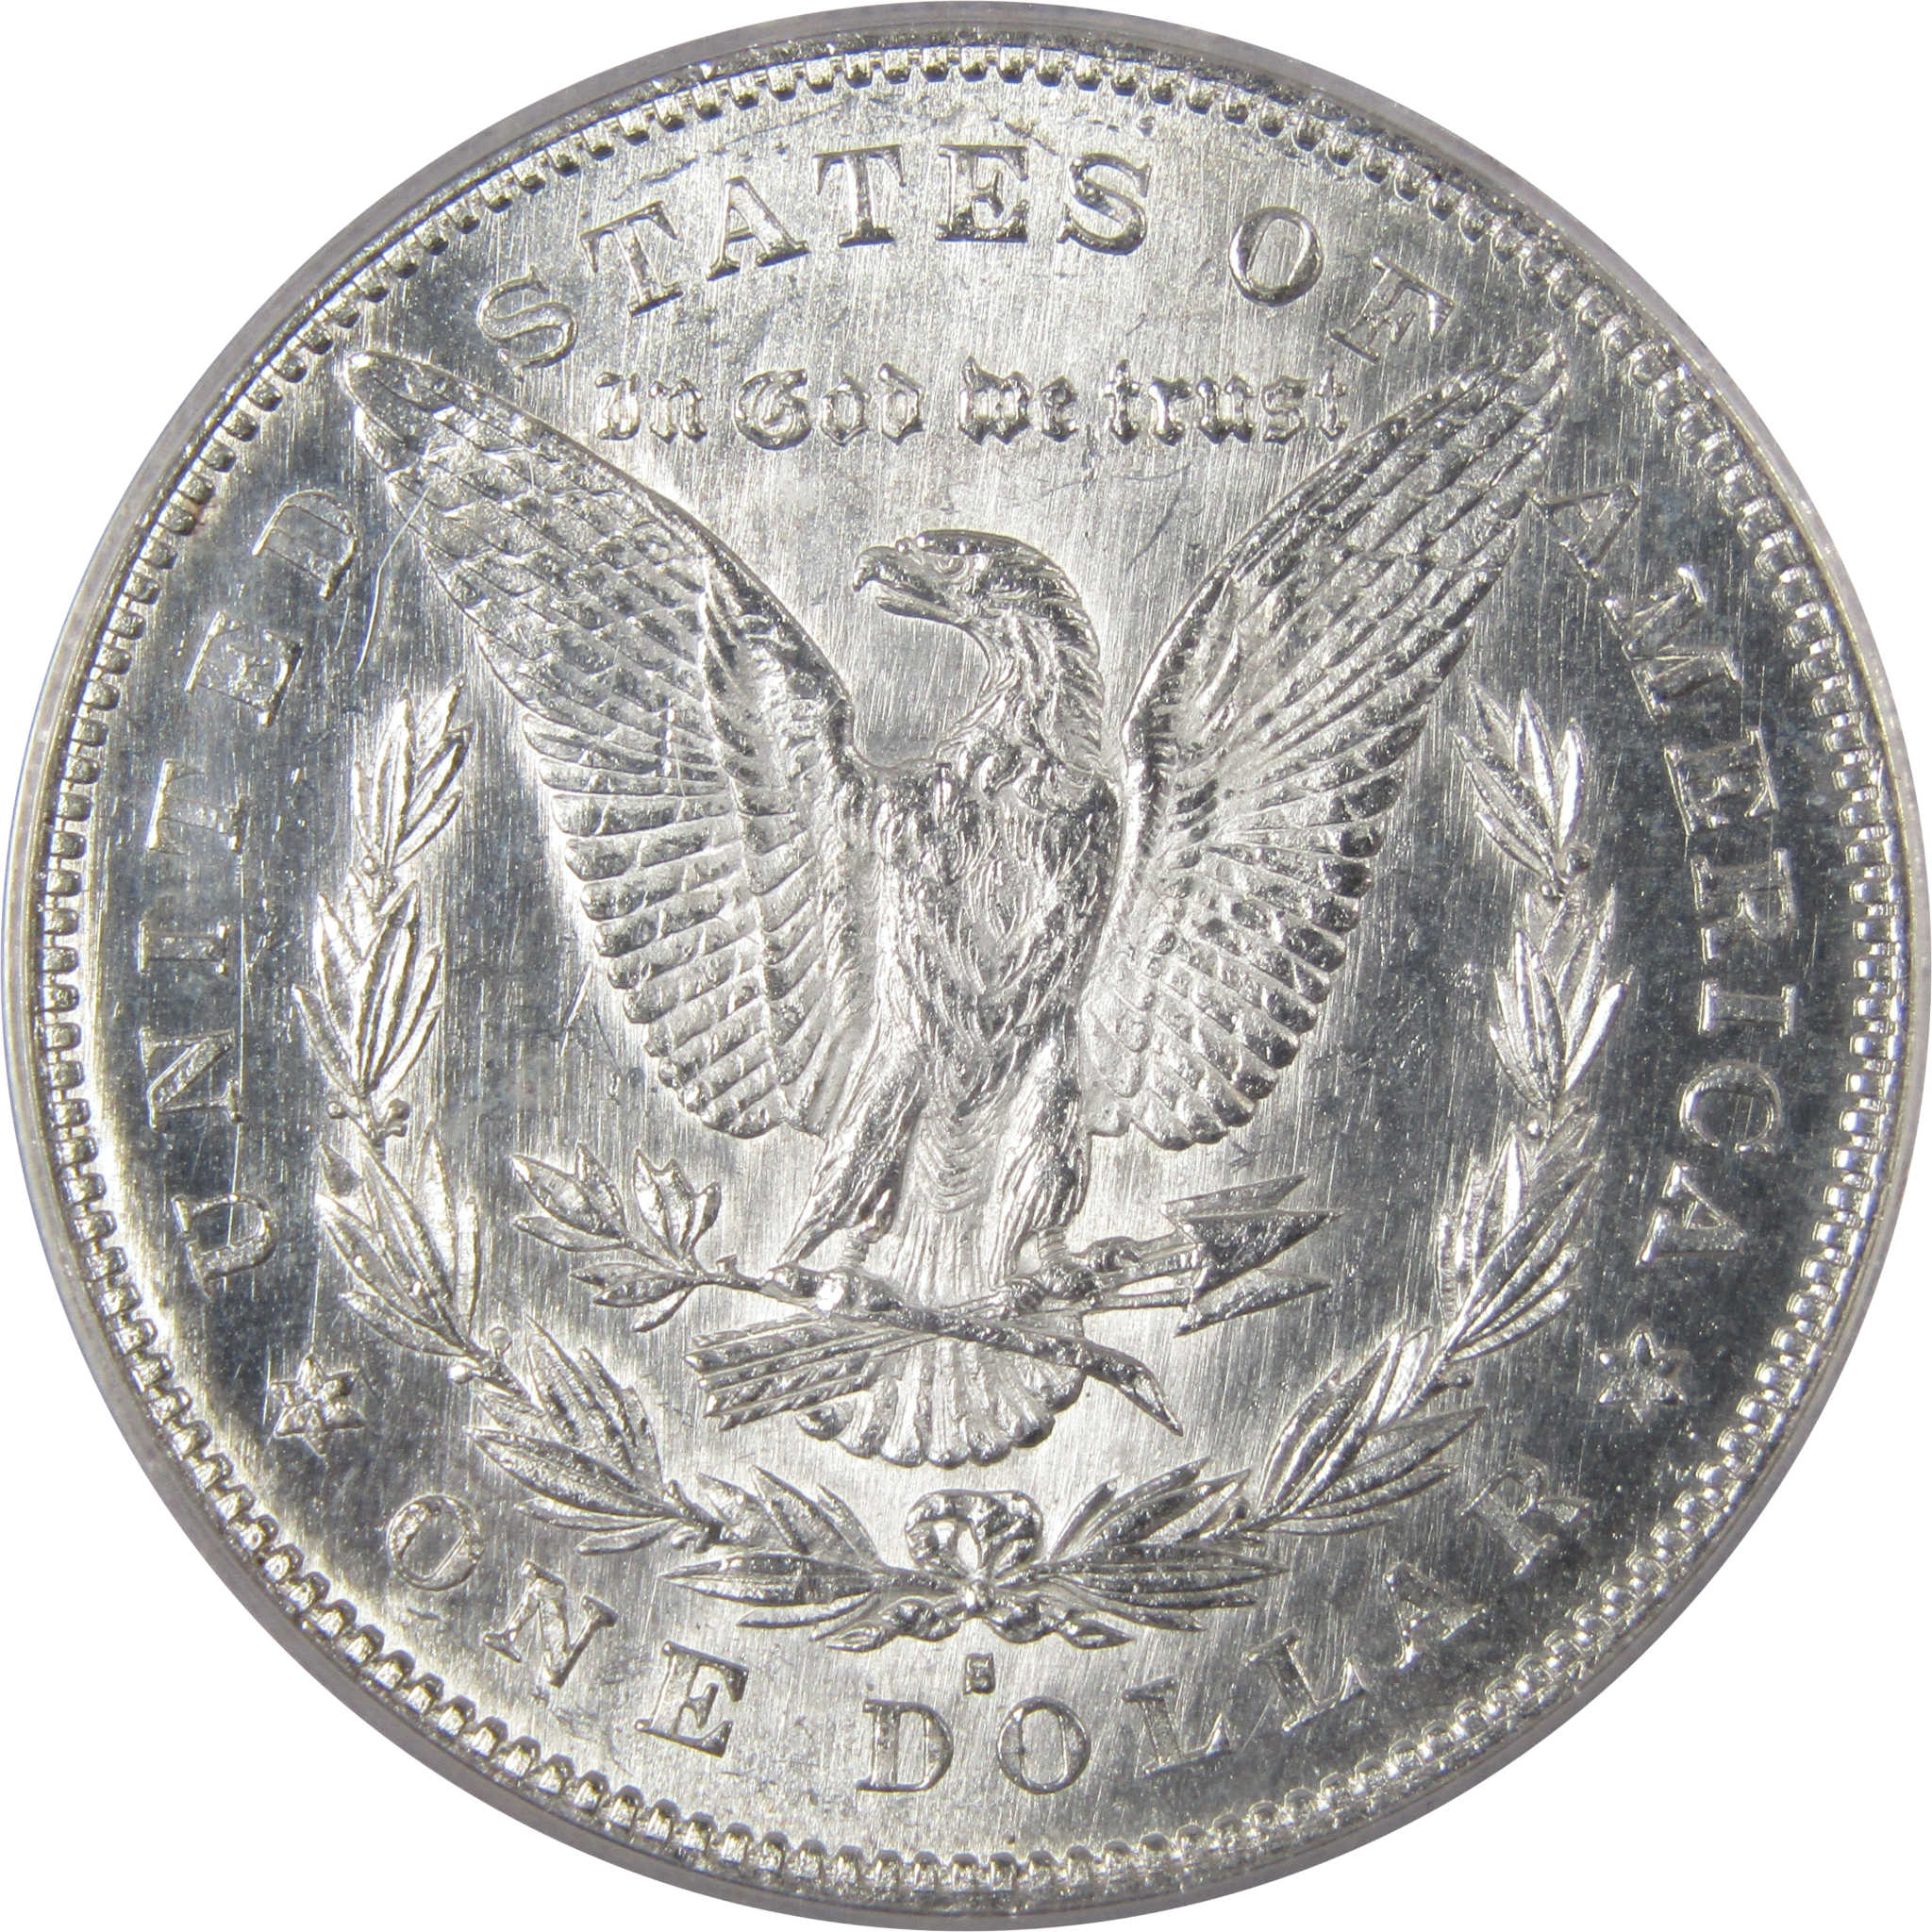 1879 S Rev 78 VAM-52 Morgan Dollar MS 62 ANACS Silver SKU:IPC9555 - Morgan coin - Morgan silver dollar - Morgan silver dollar for sale - Profile Coins &amp; Collectibles